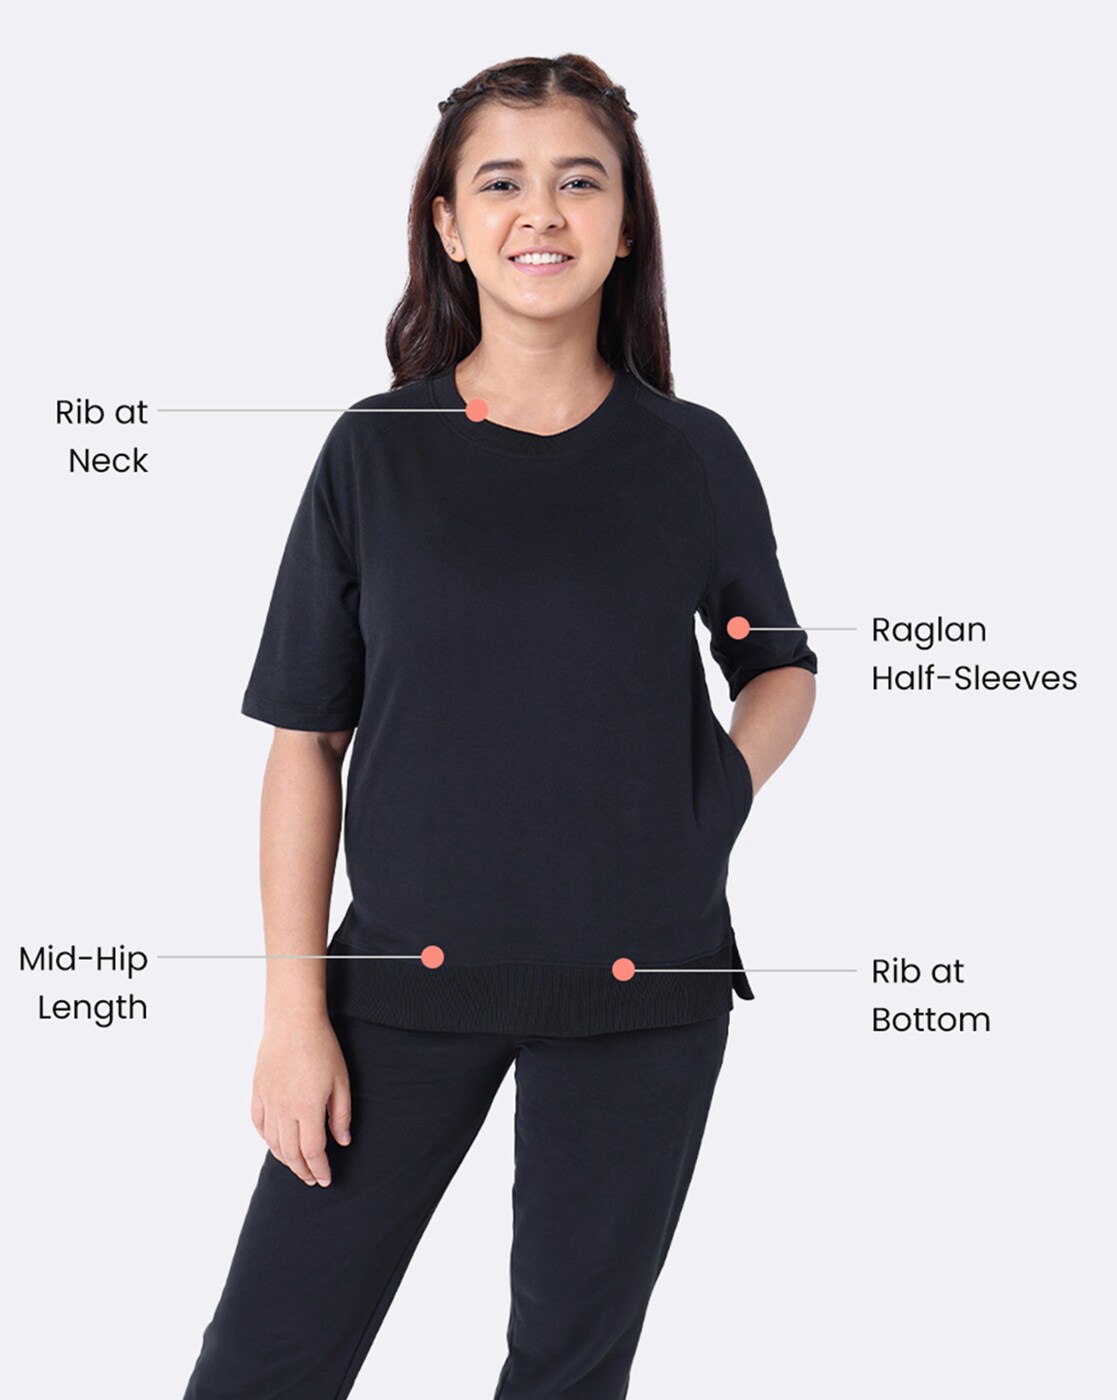 Buy Black Tshirts for Women by BLISSCLUB Online